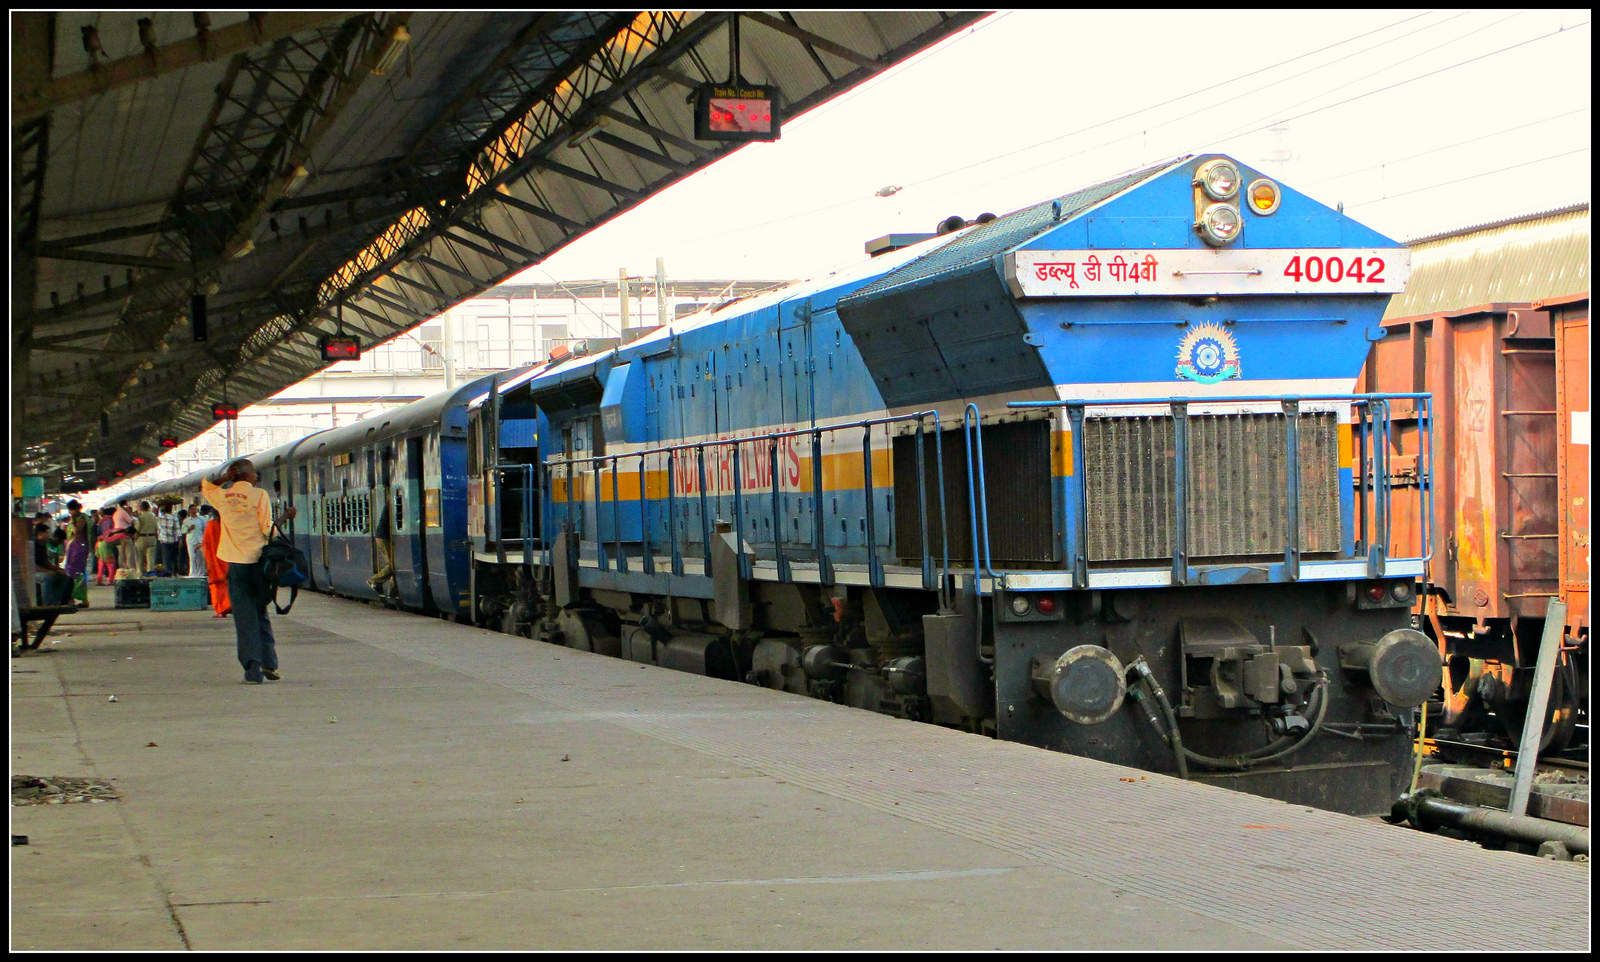 Delhi to Mumbai trains